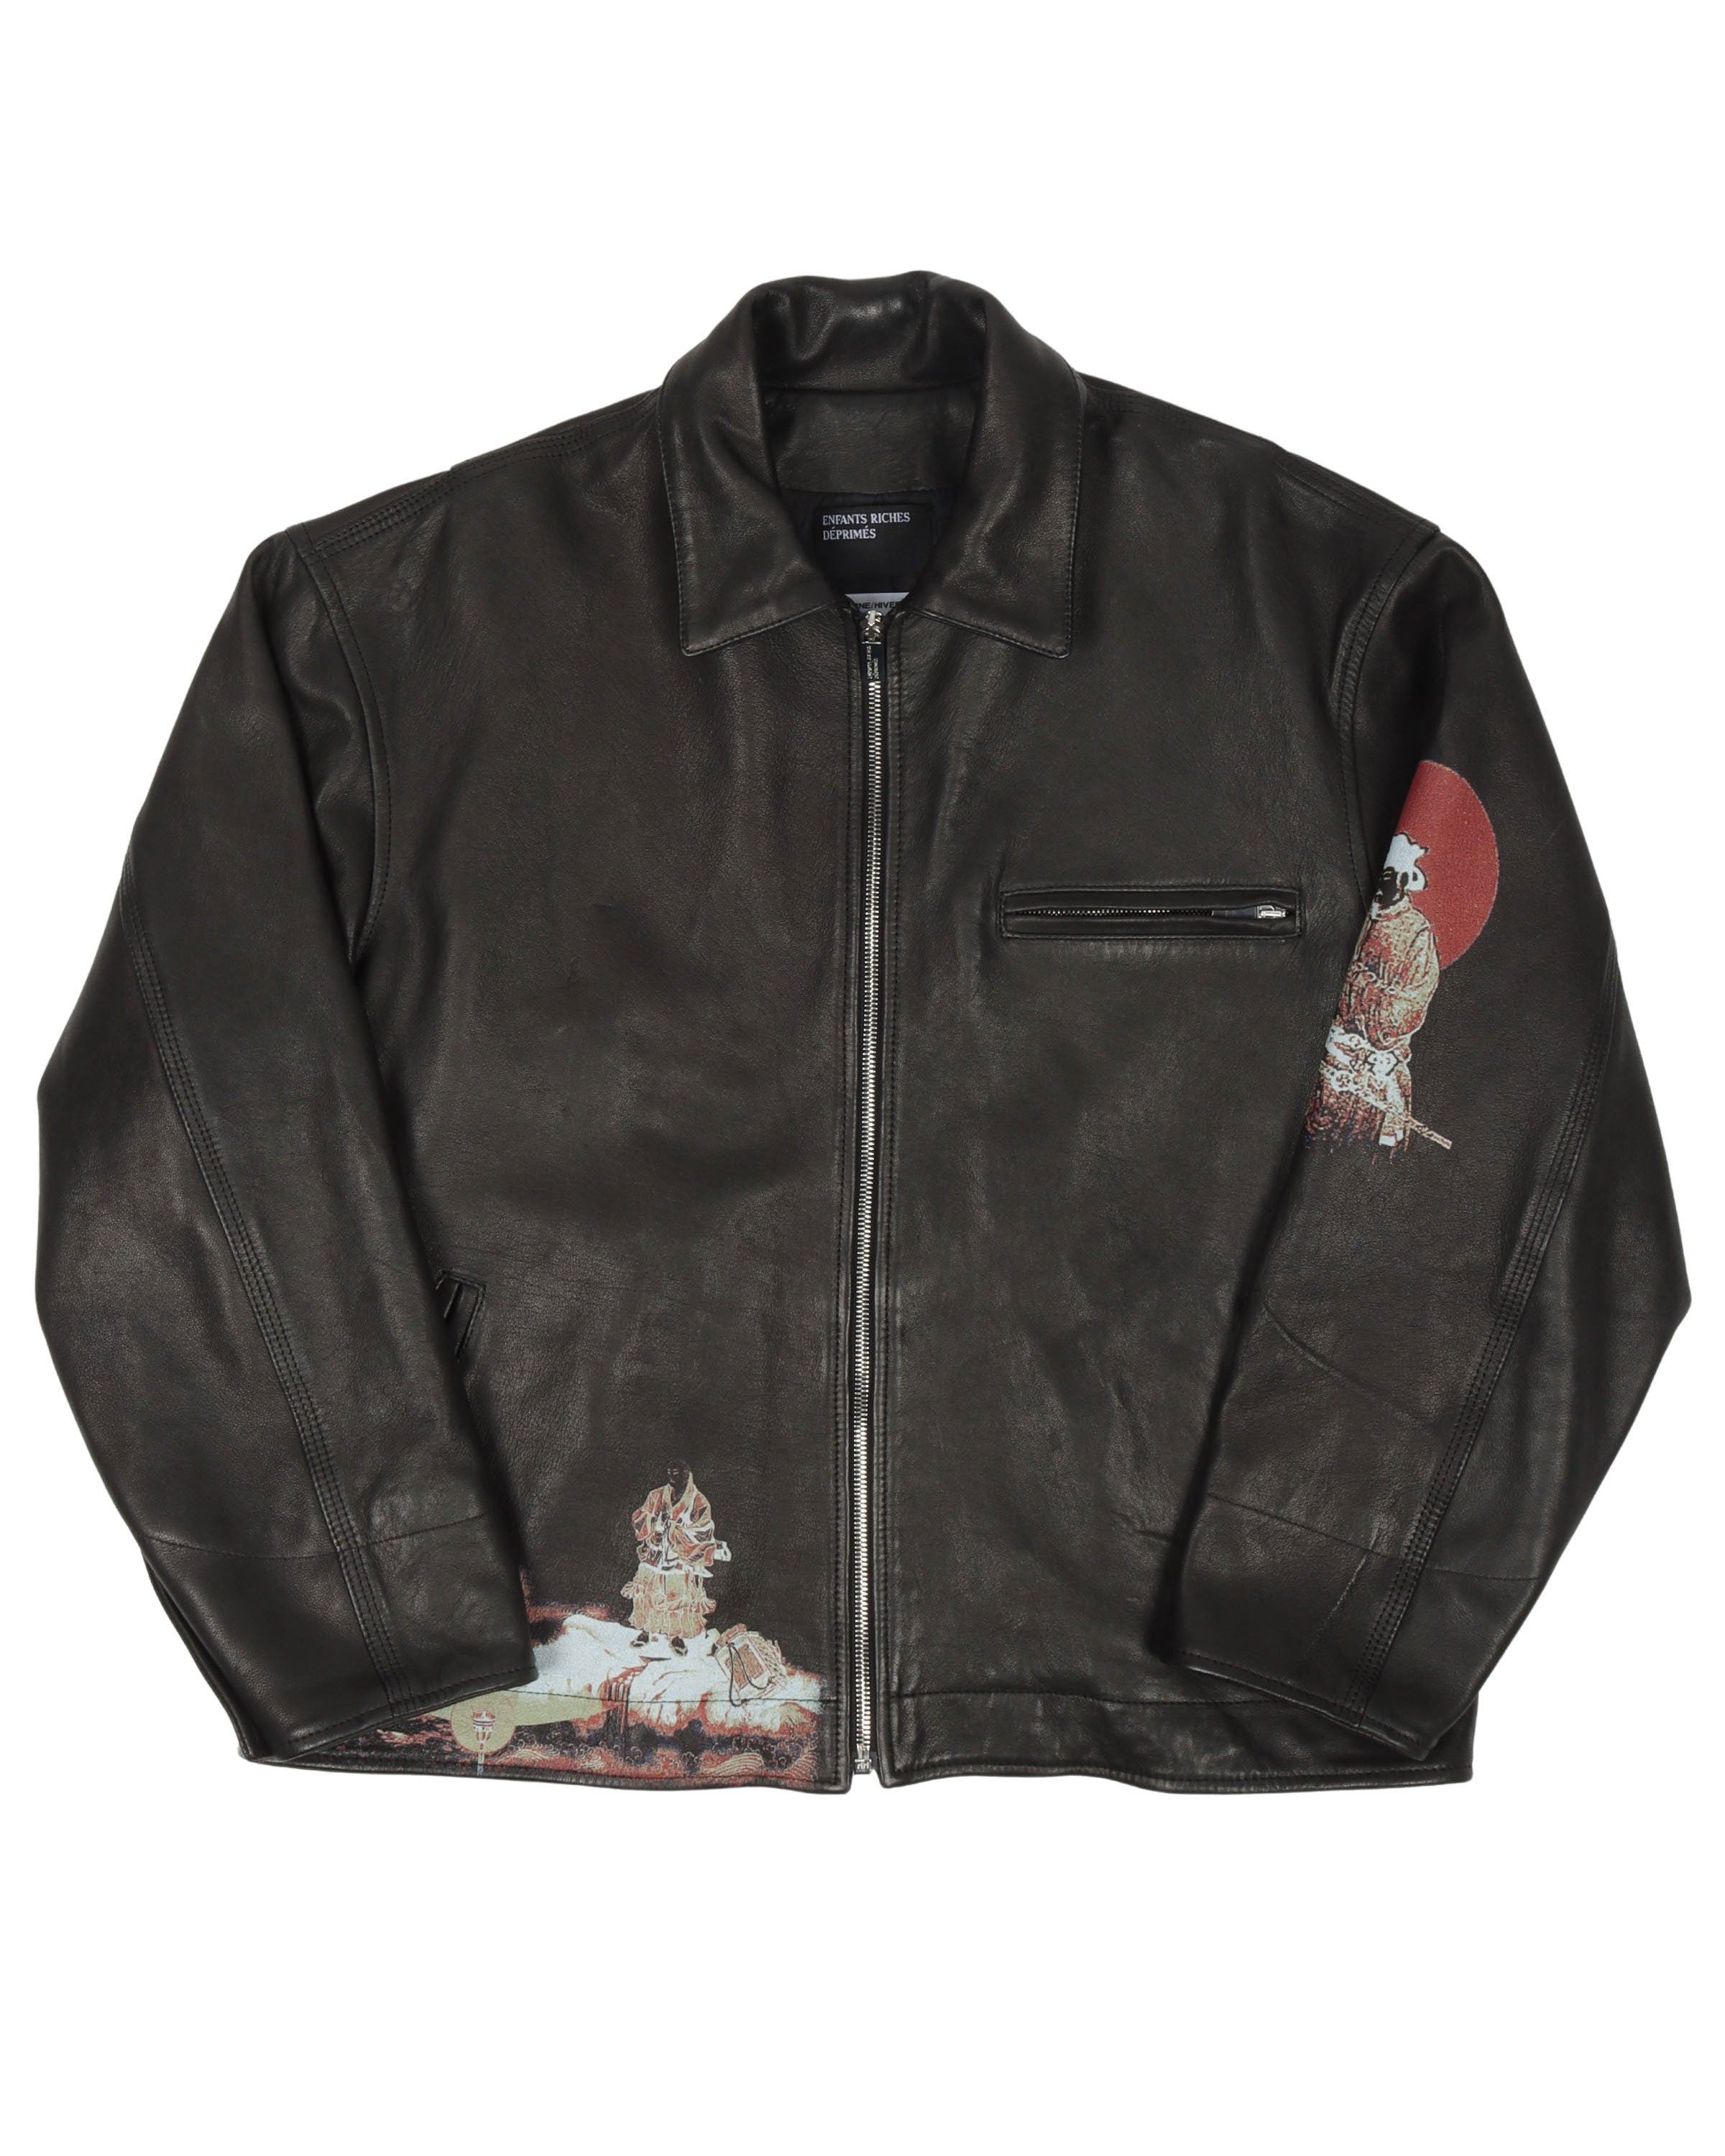 Himalayan Junkie Leather Jacket